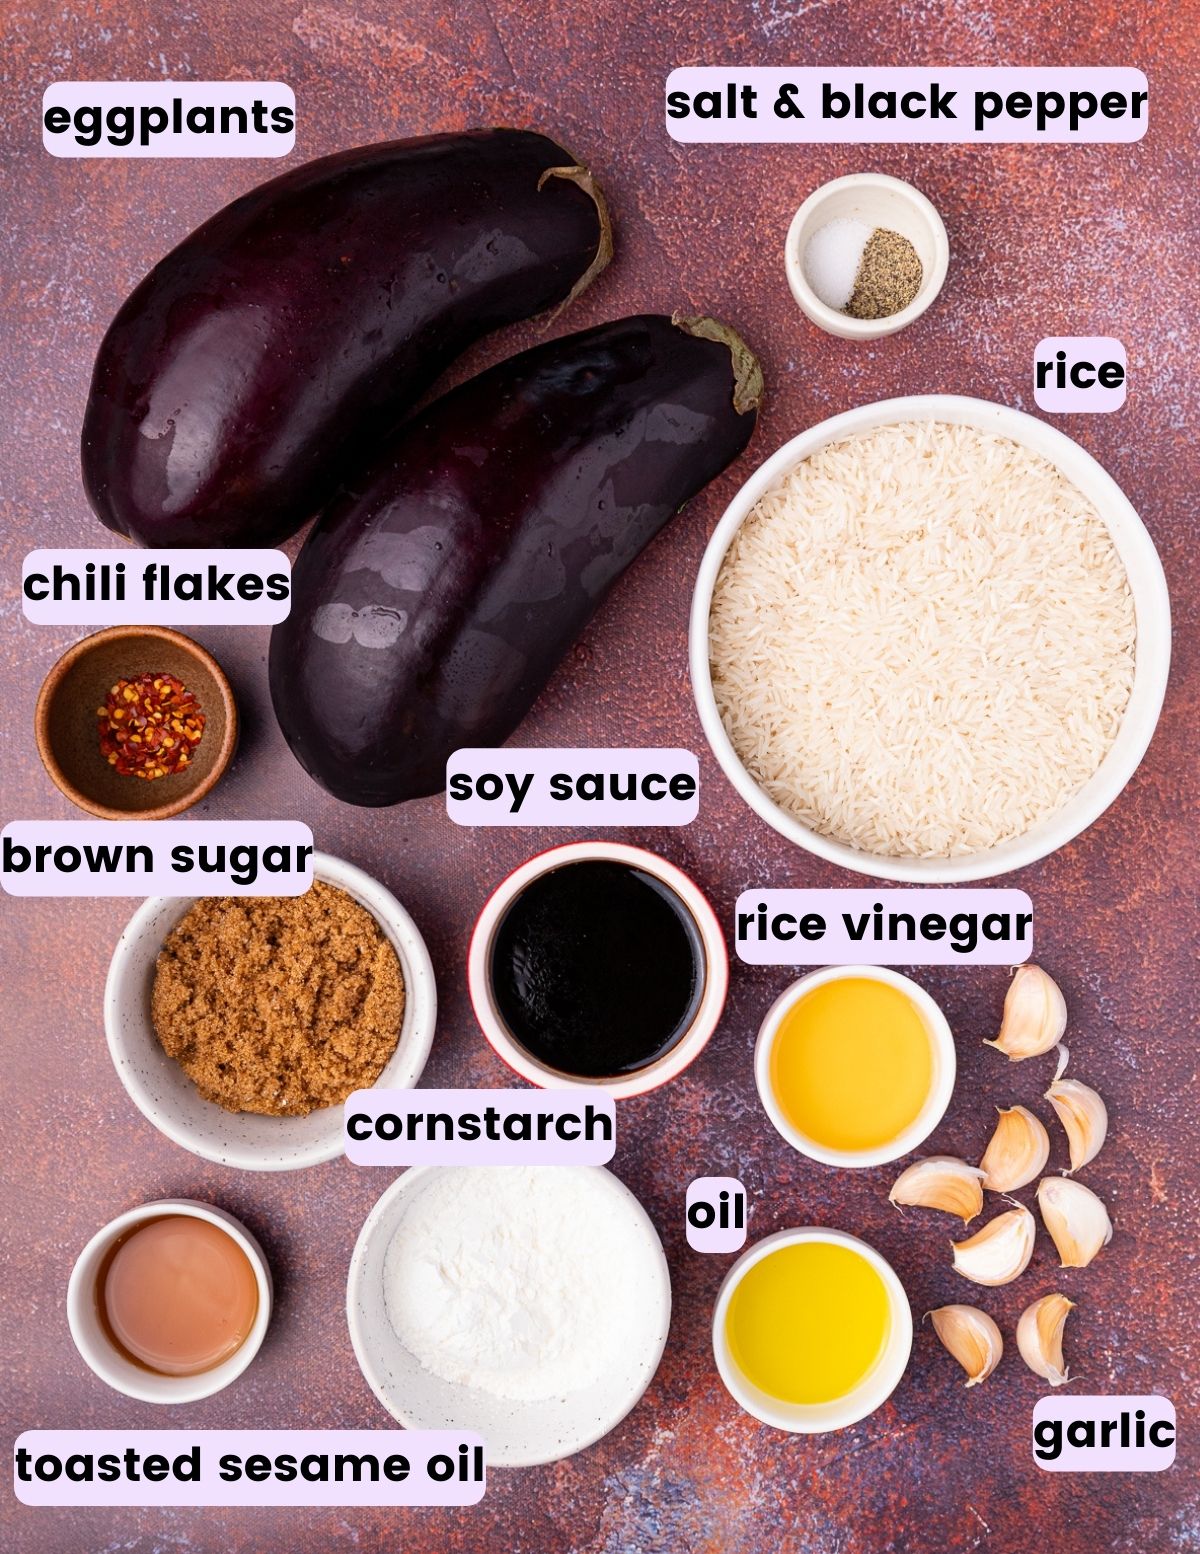 eggplant, salt,pepper, rice, chili flakes, brown sugar, soy sauce, rice vinegar, cornstarch, sesame oil, garlic, 